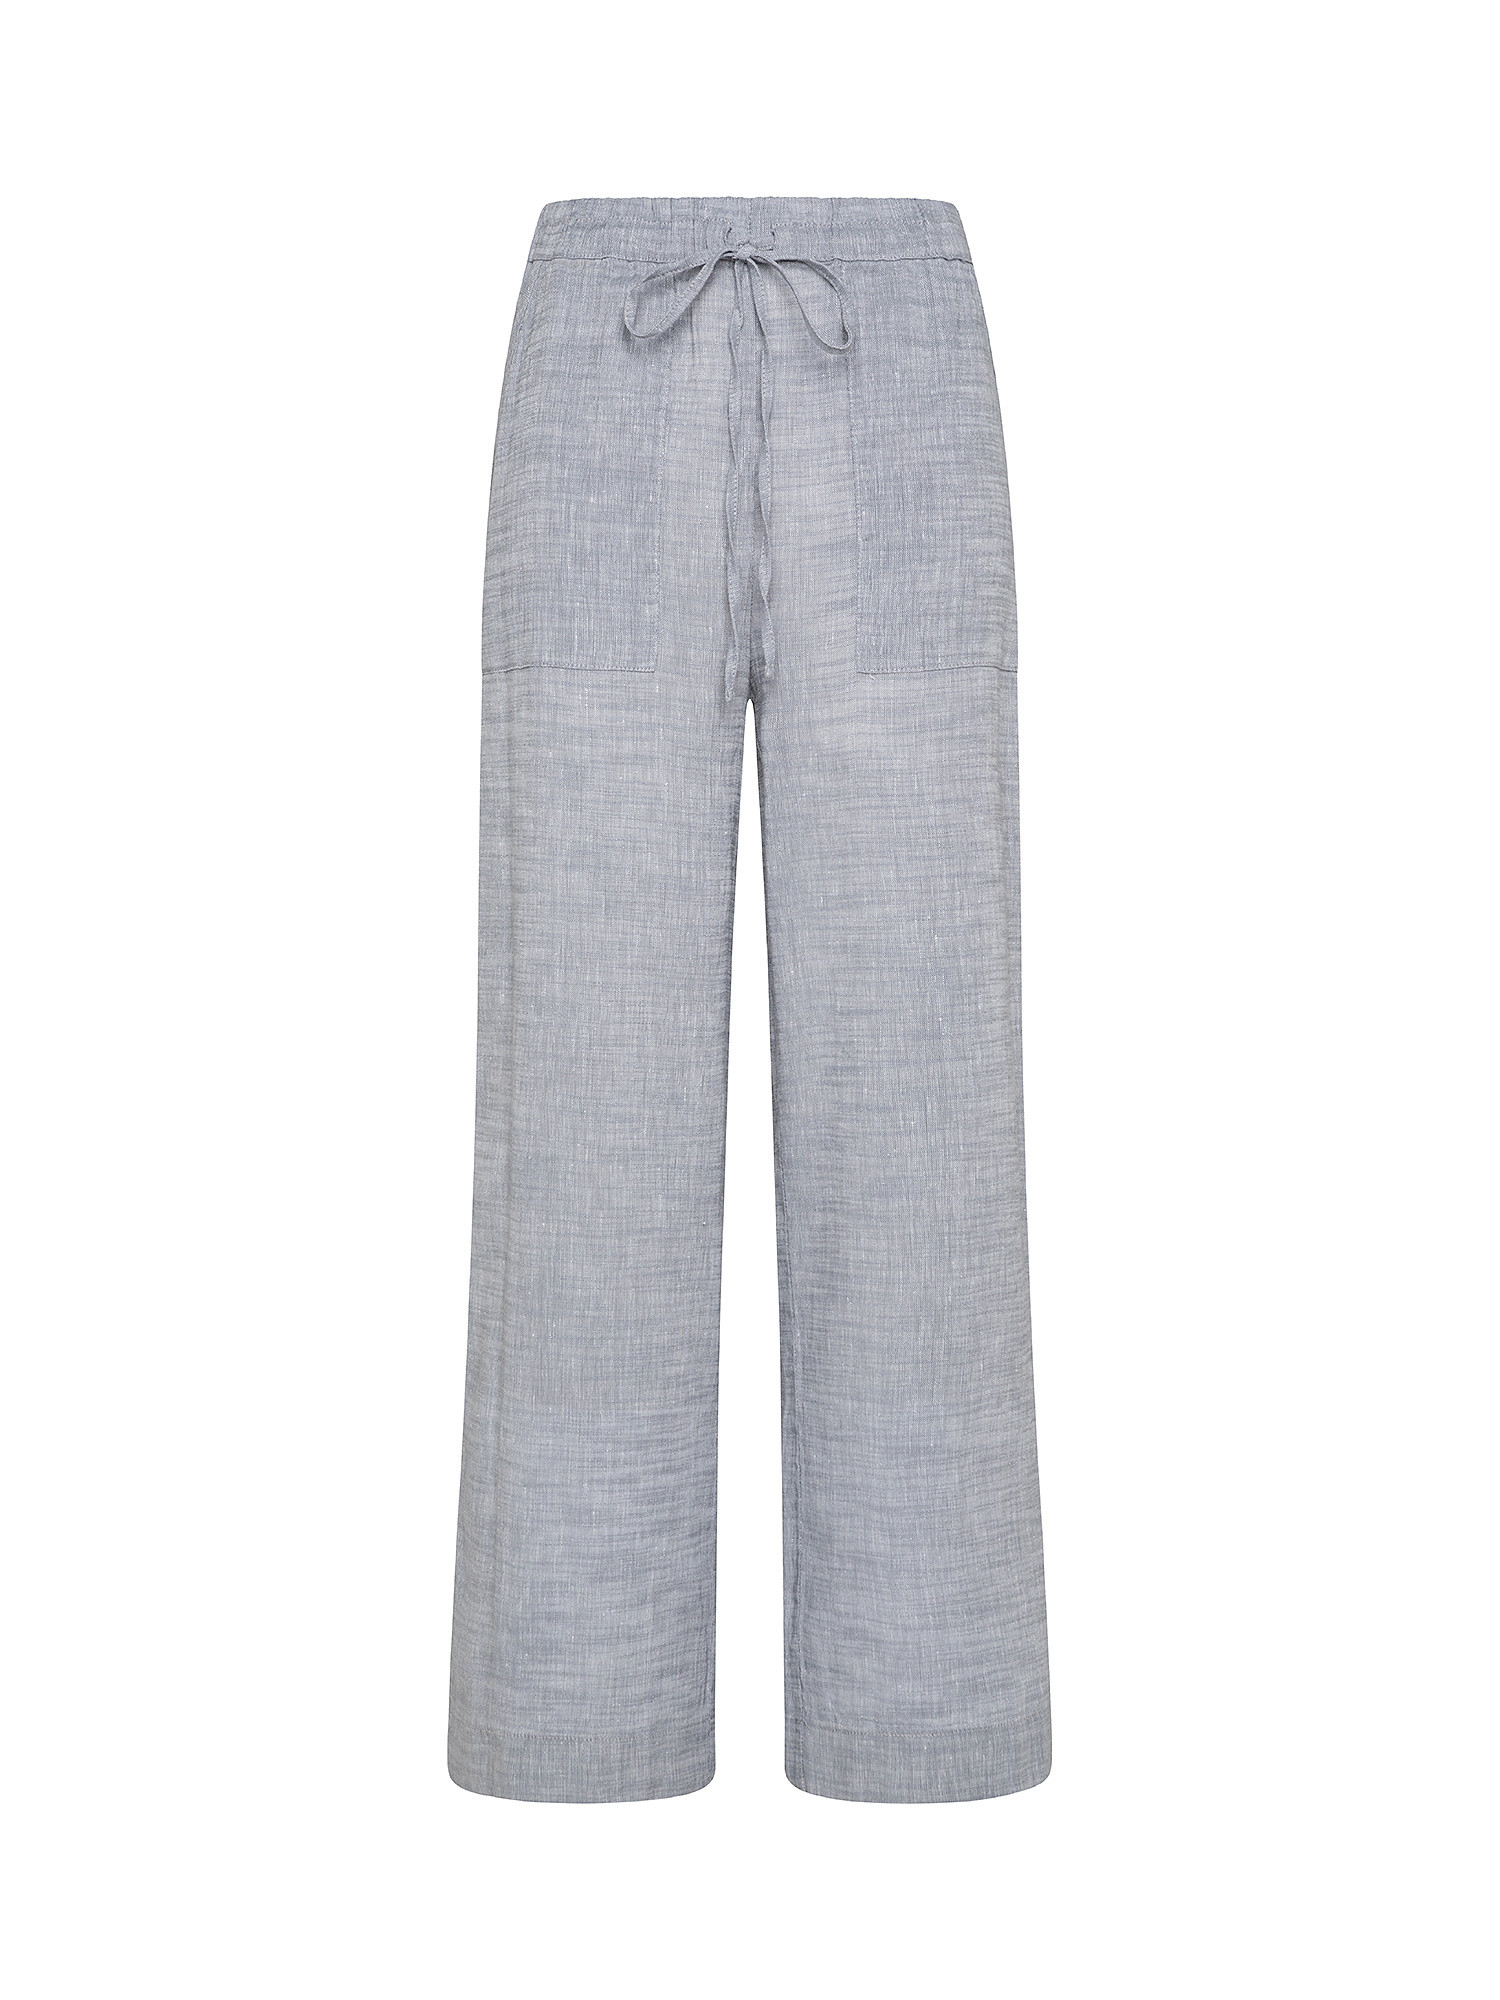 Pantalone in misto lino, Grigio chiaro, large image number 0